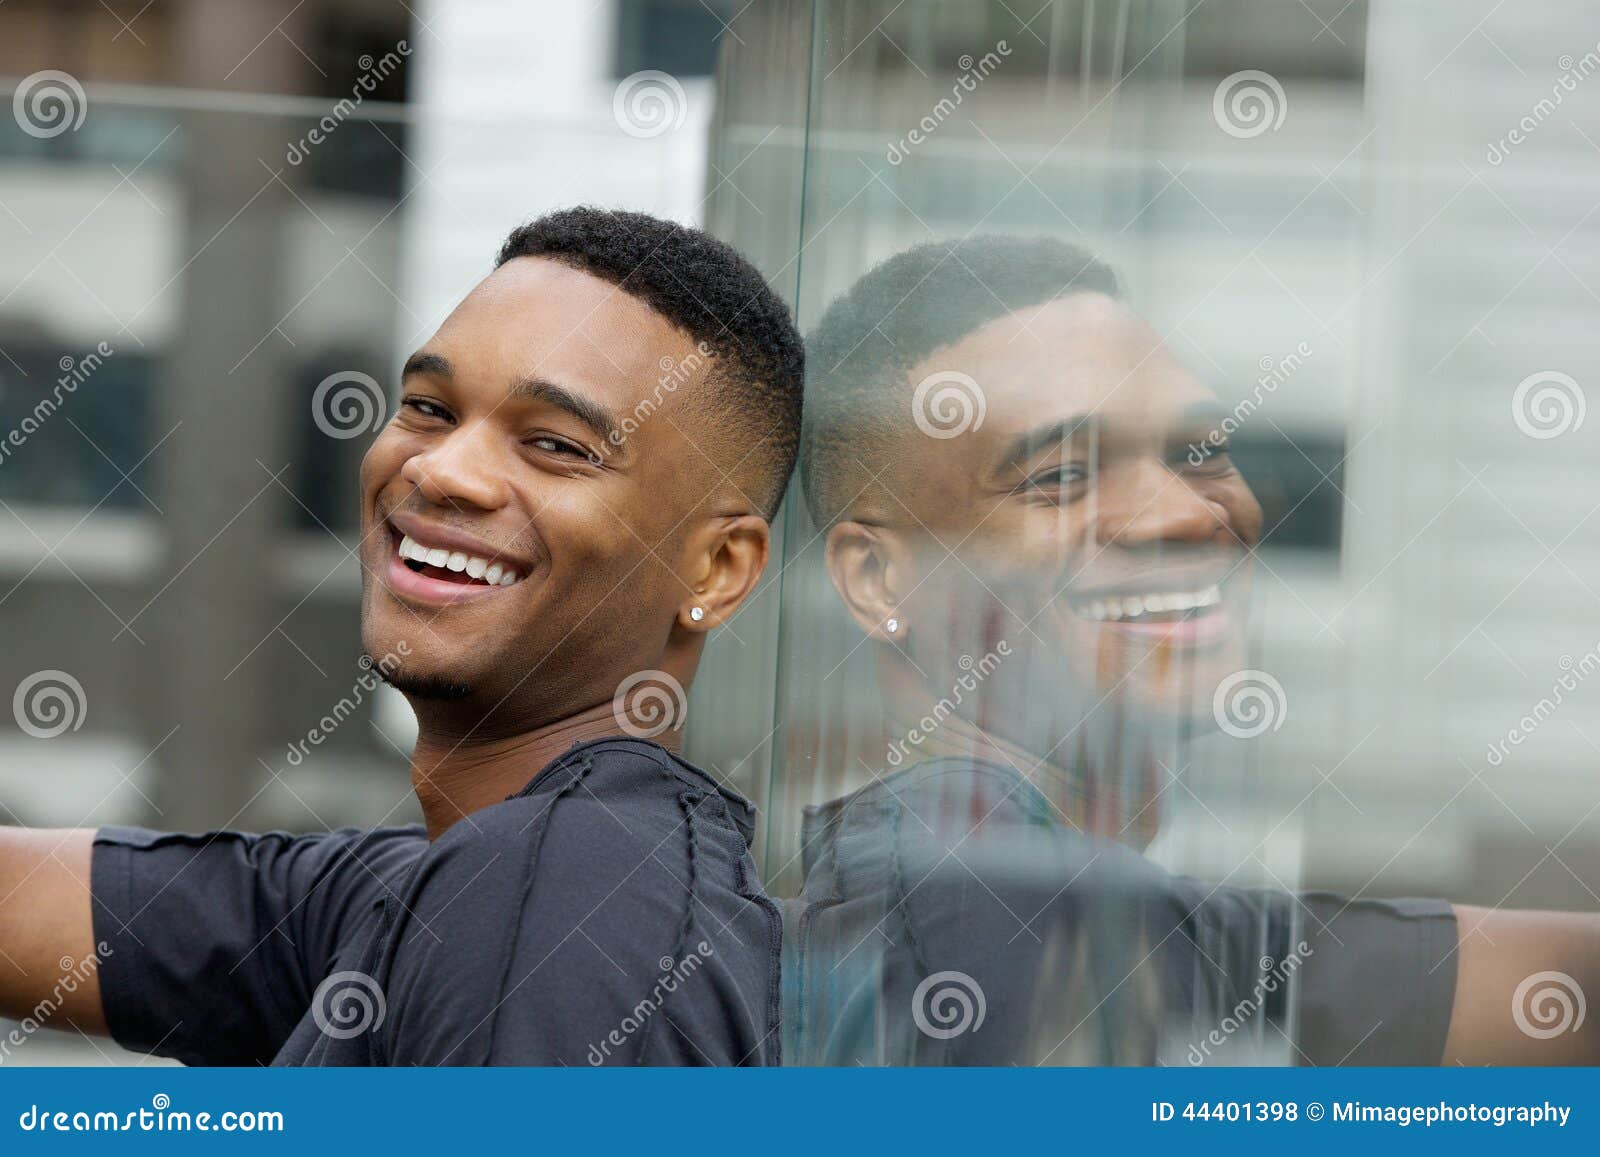 handsome-young-black-man-smiling-close-up-portrait-44401398.jpg